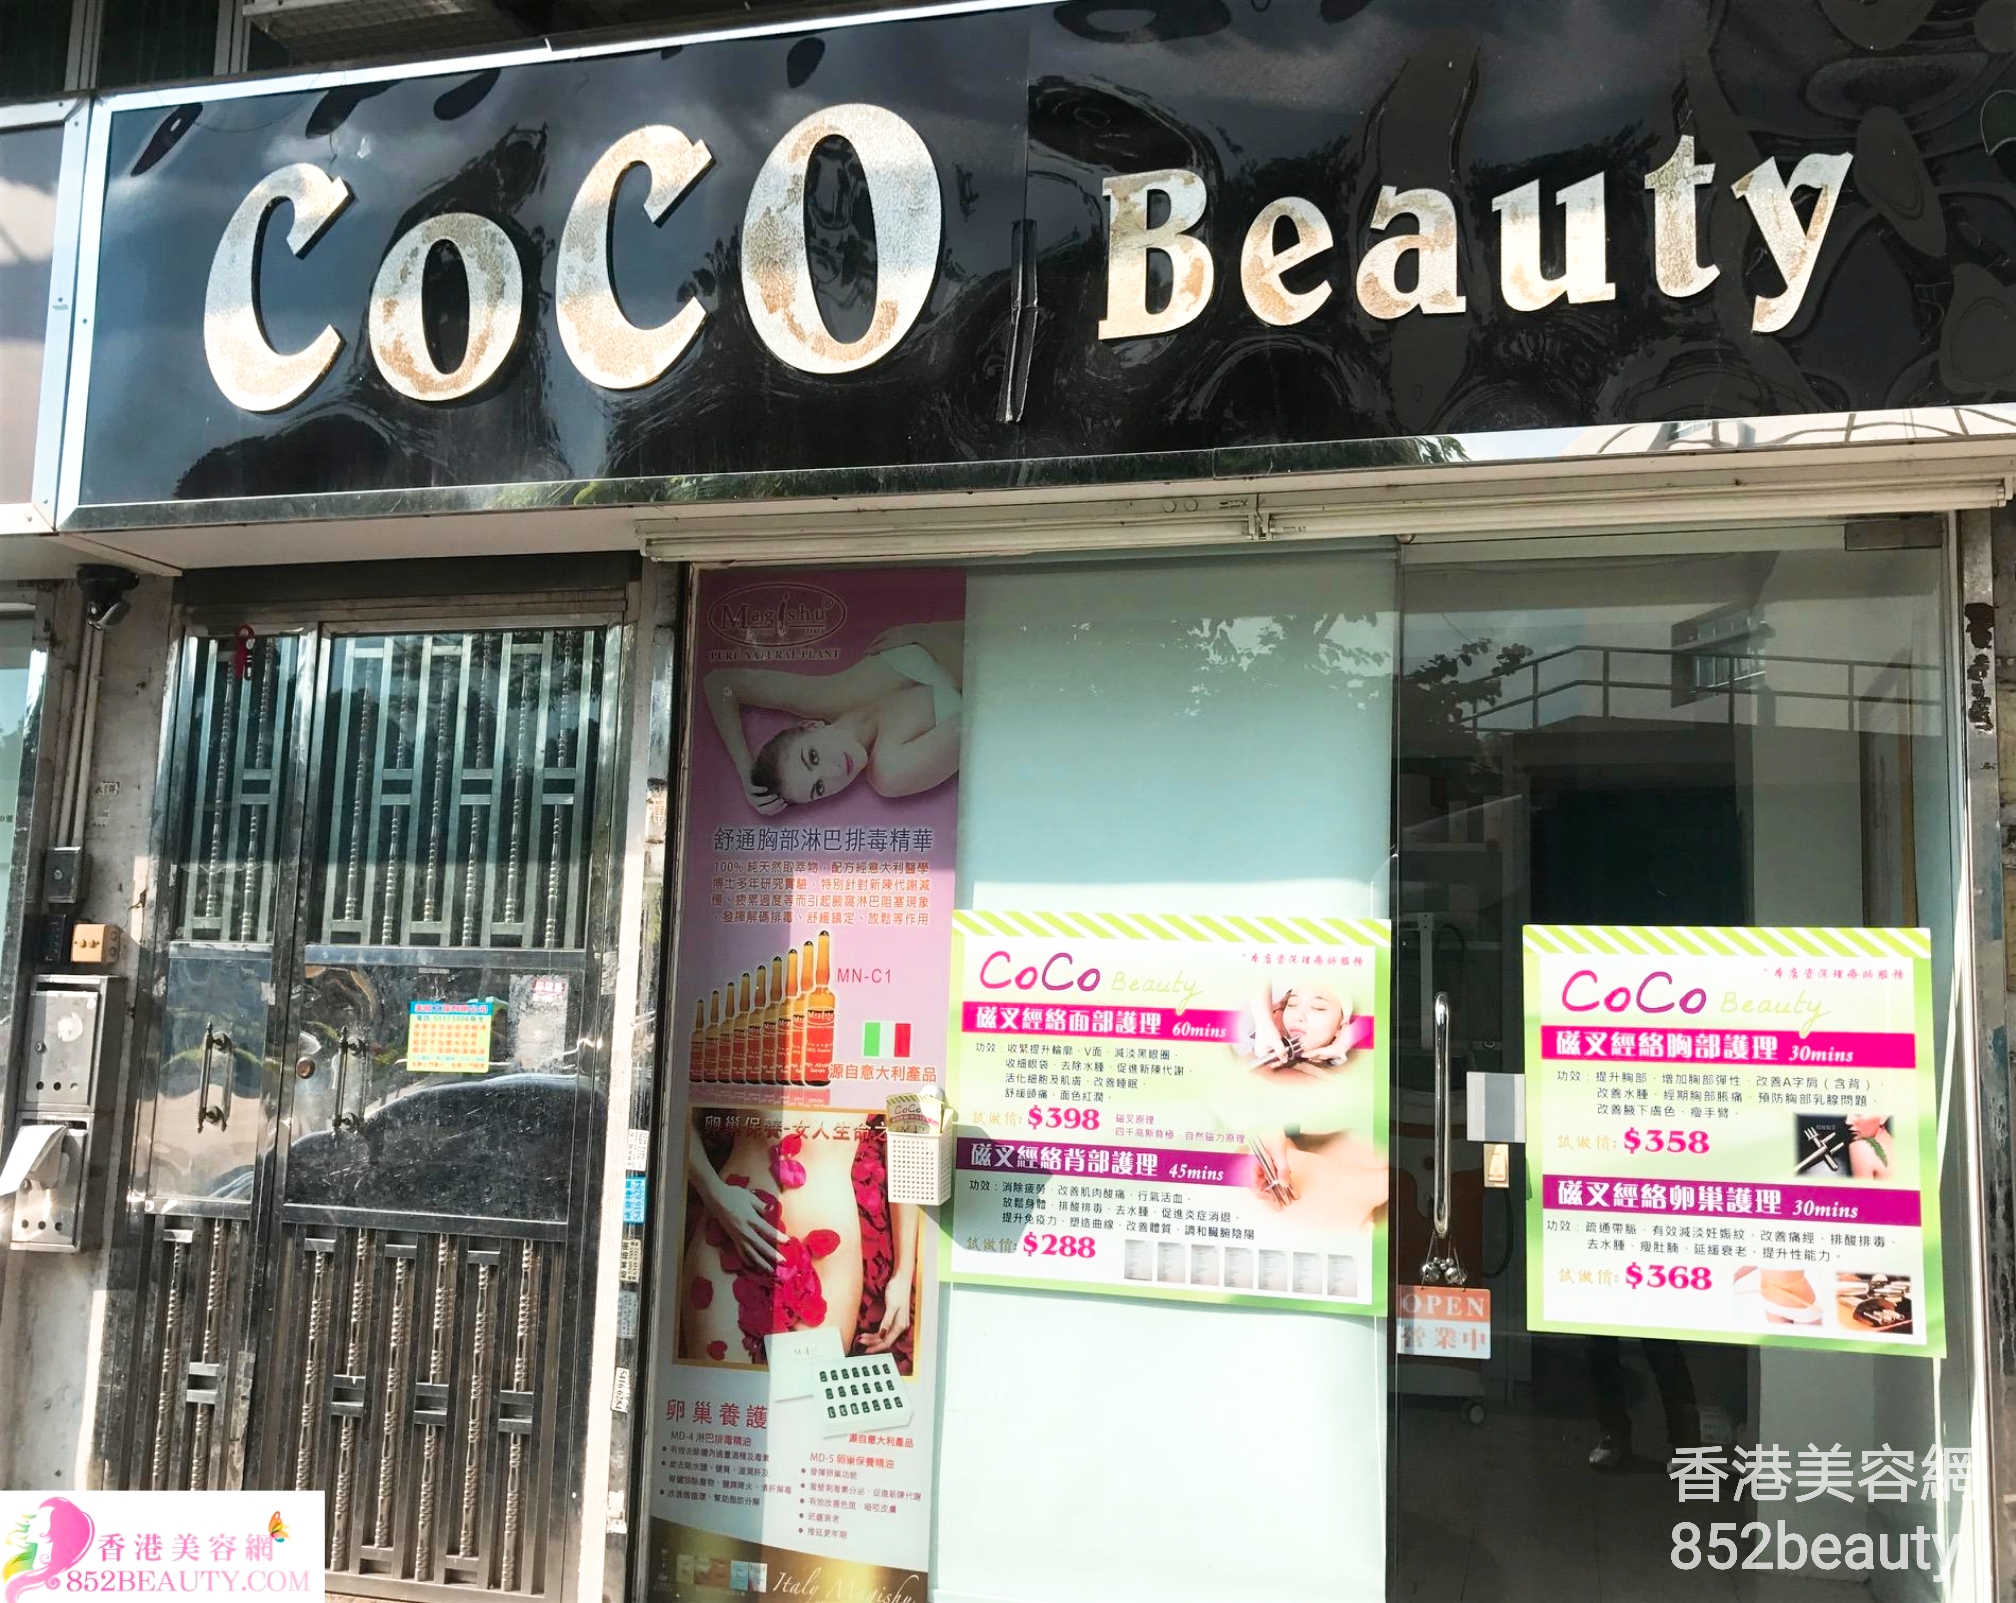 香港美容網 Hong Kong Beauty Salon 美容院 / 美容師: Coco Beauty